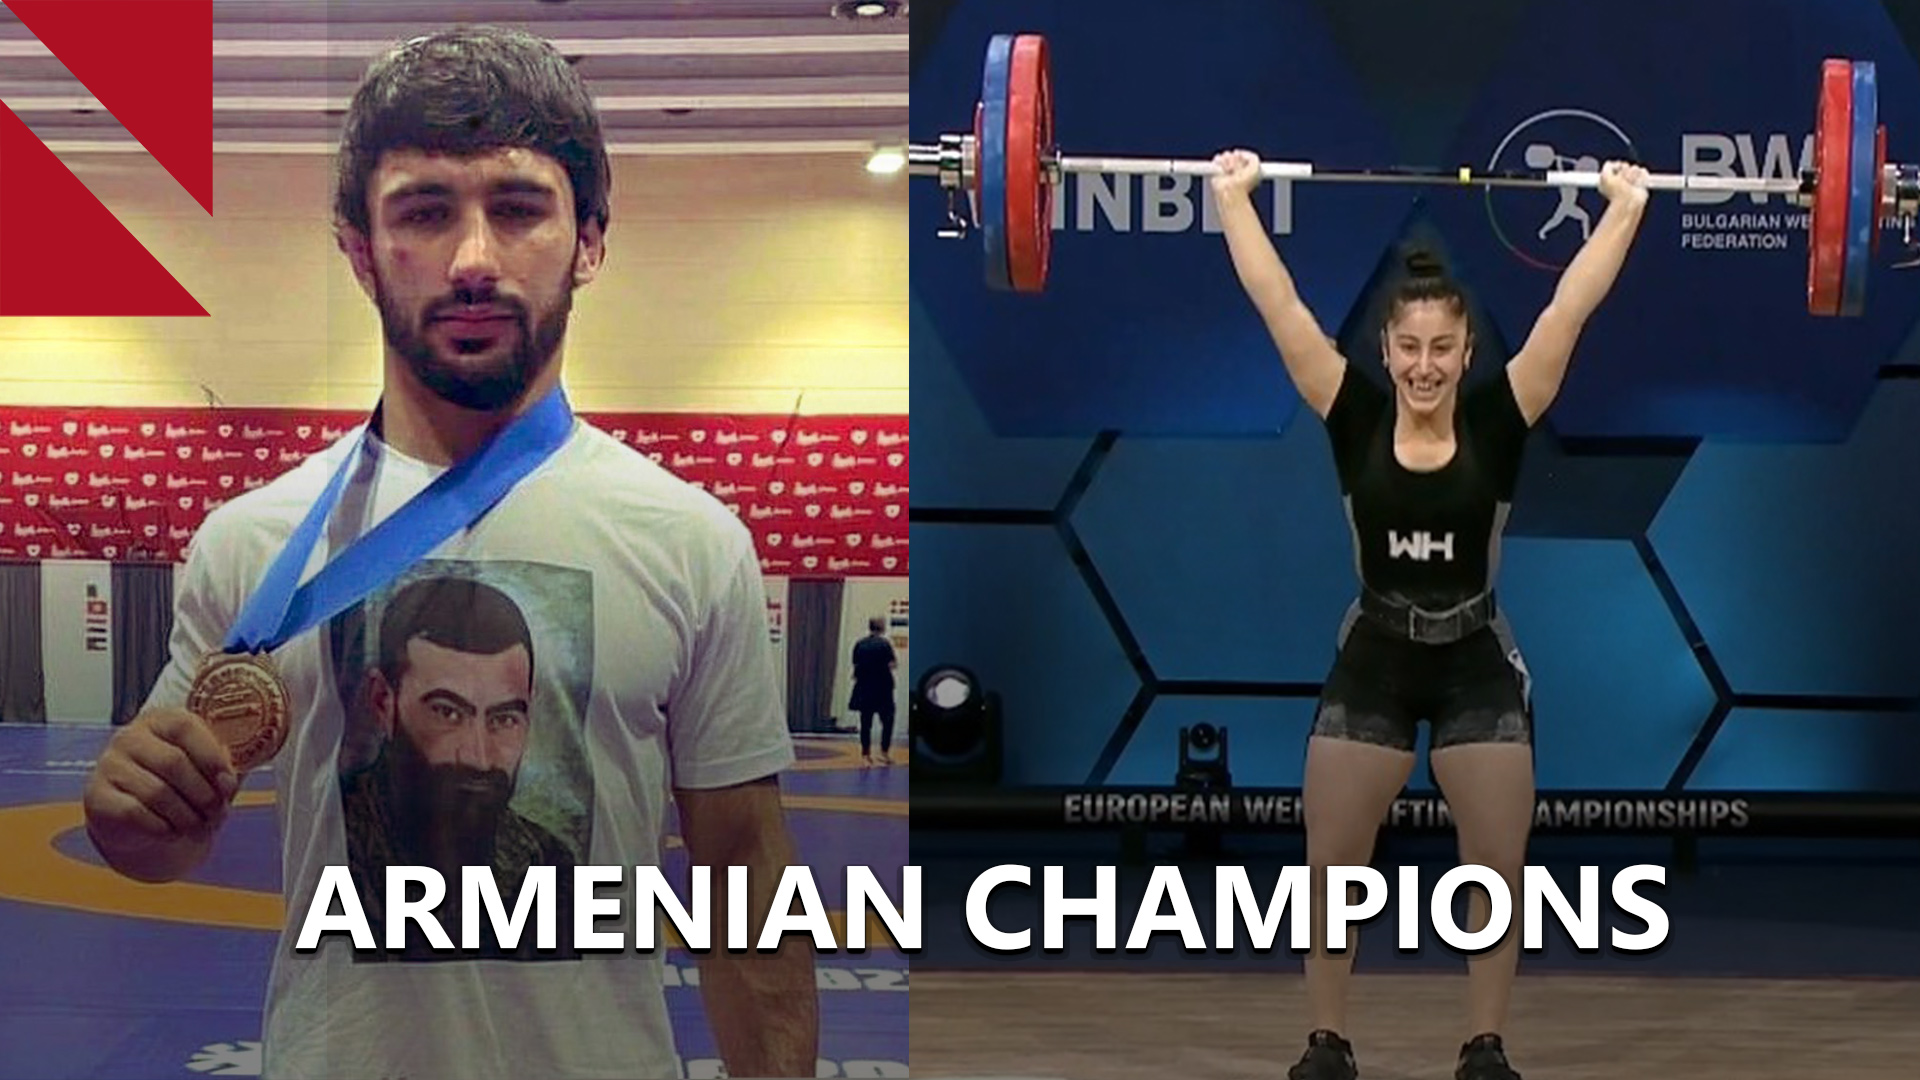 ARMENIAN-CHAMPIONS